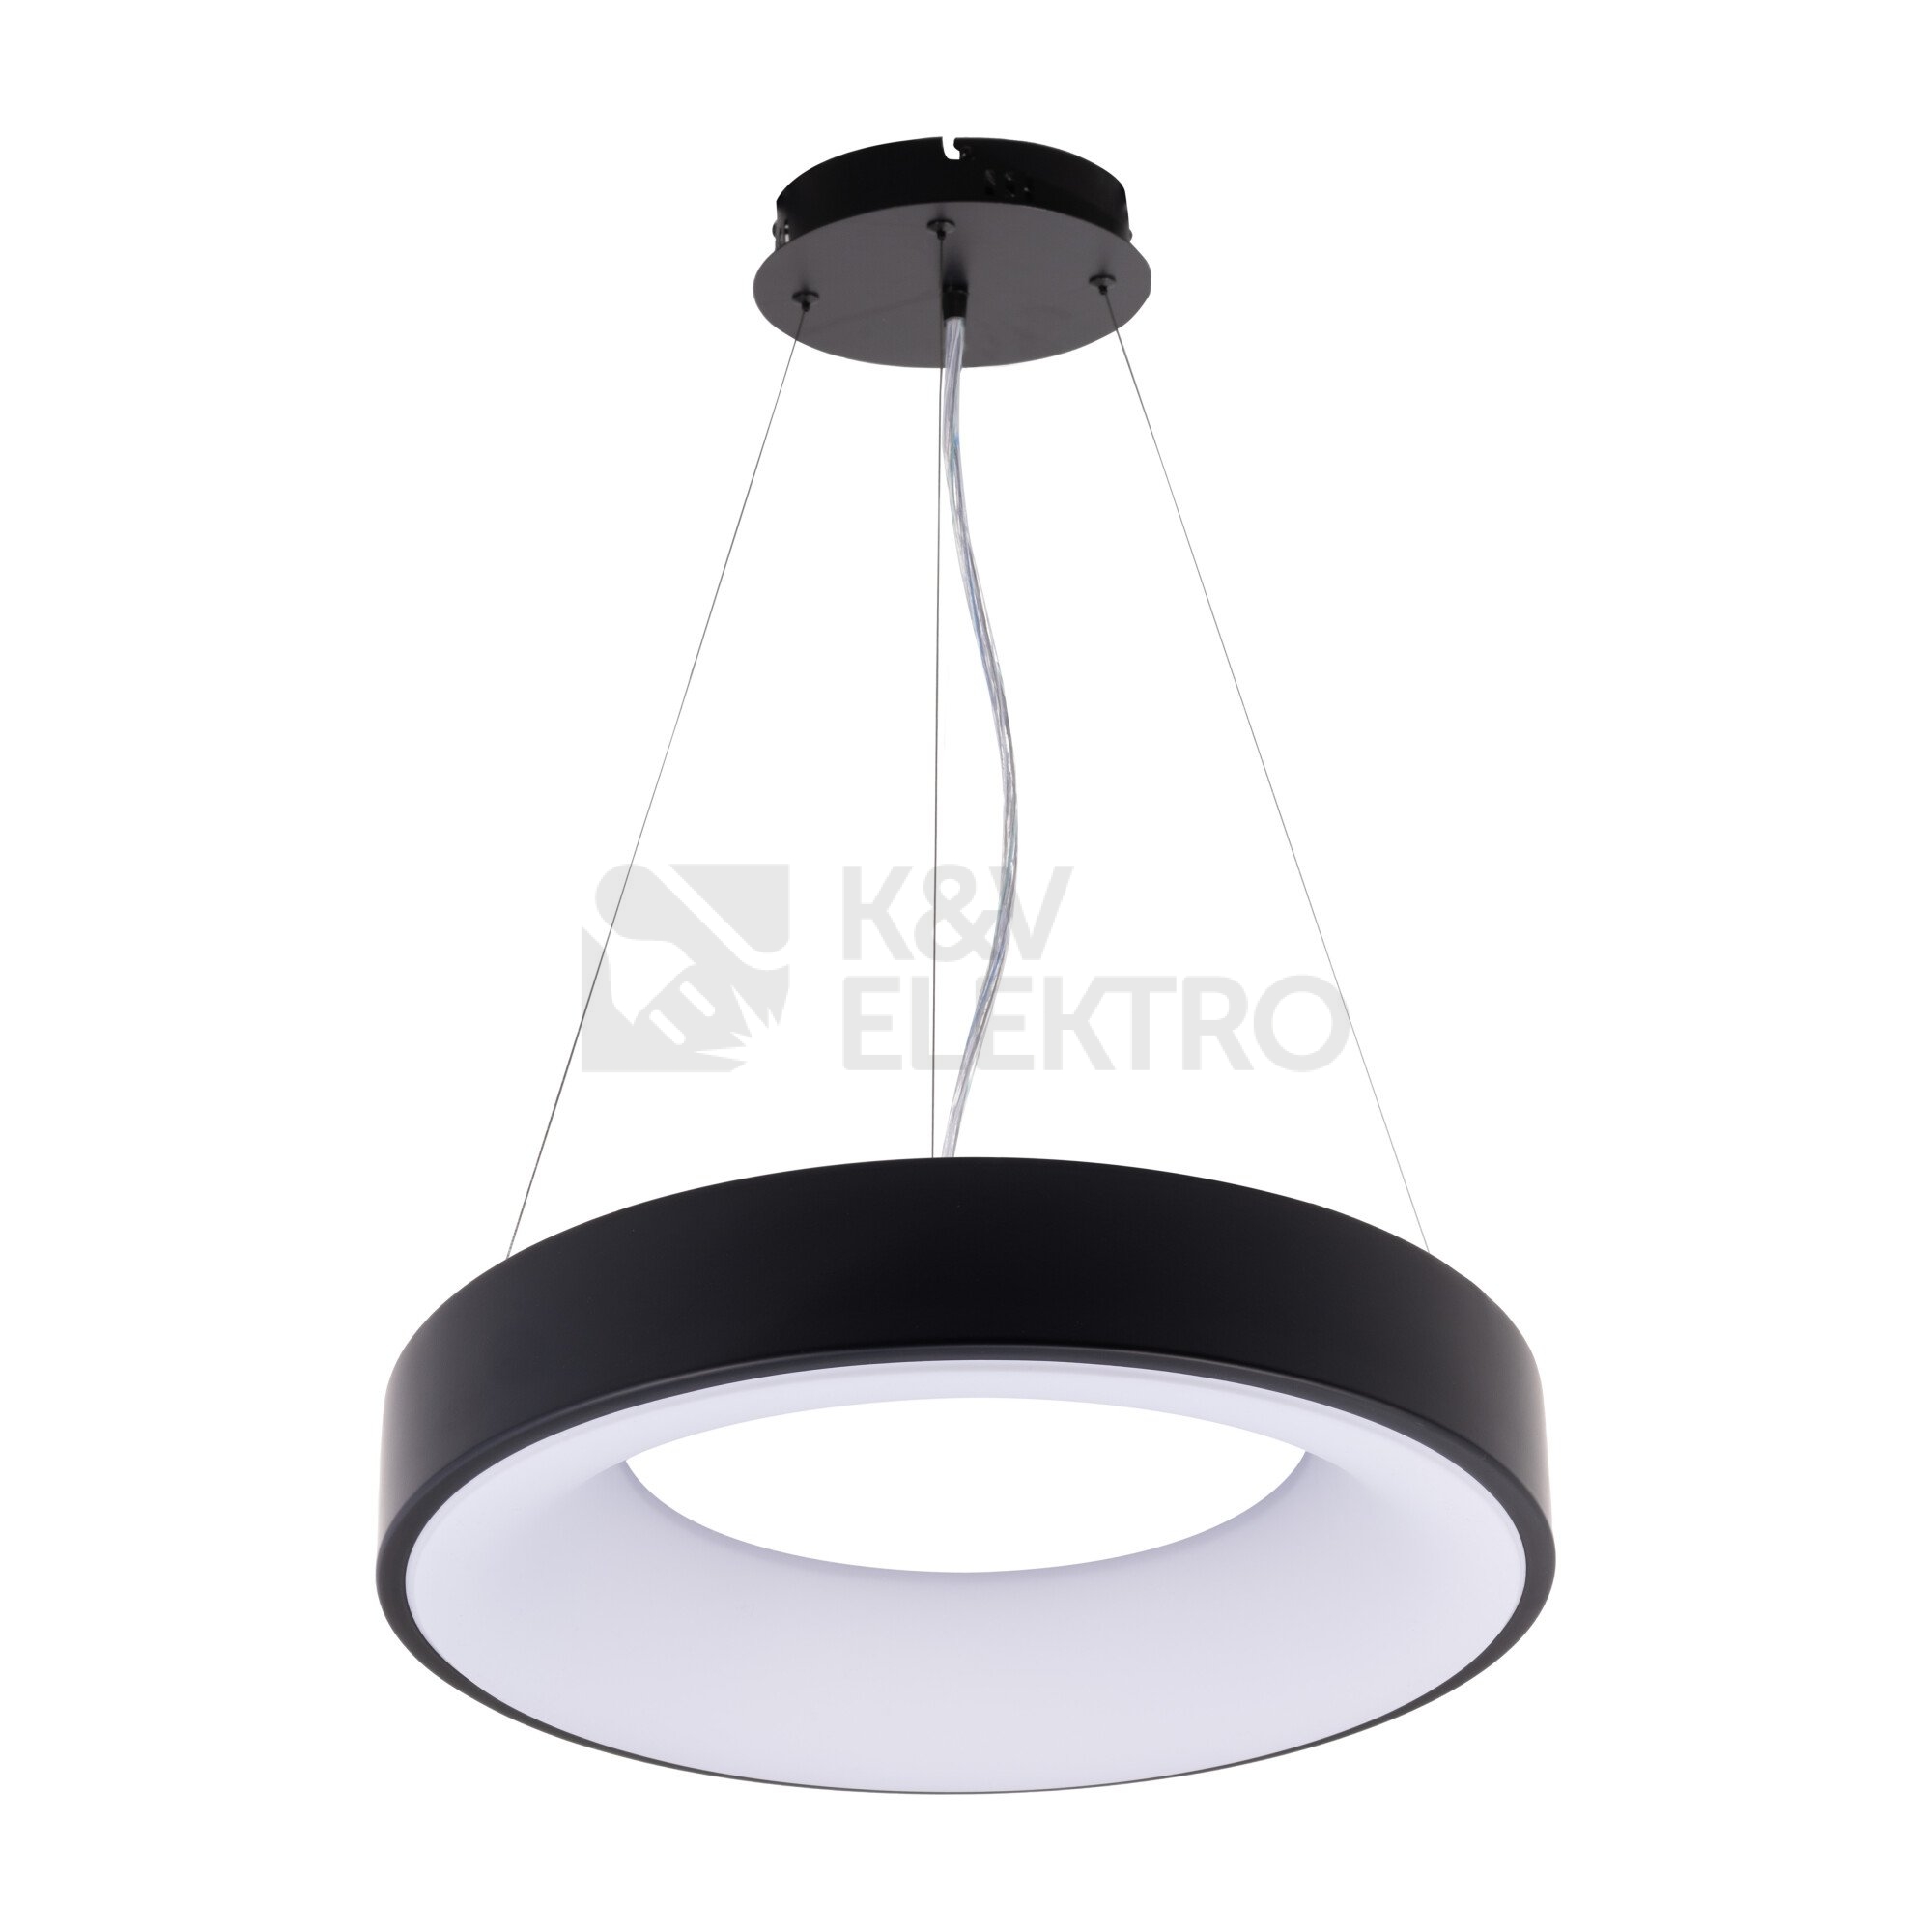 Obrázek produktu Stmívatelné závěsné LED svítidlo, 48W, CCT, barva bílá, TRIAK 105544 0